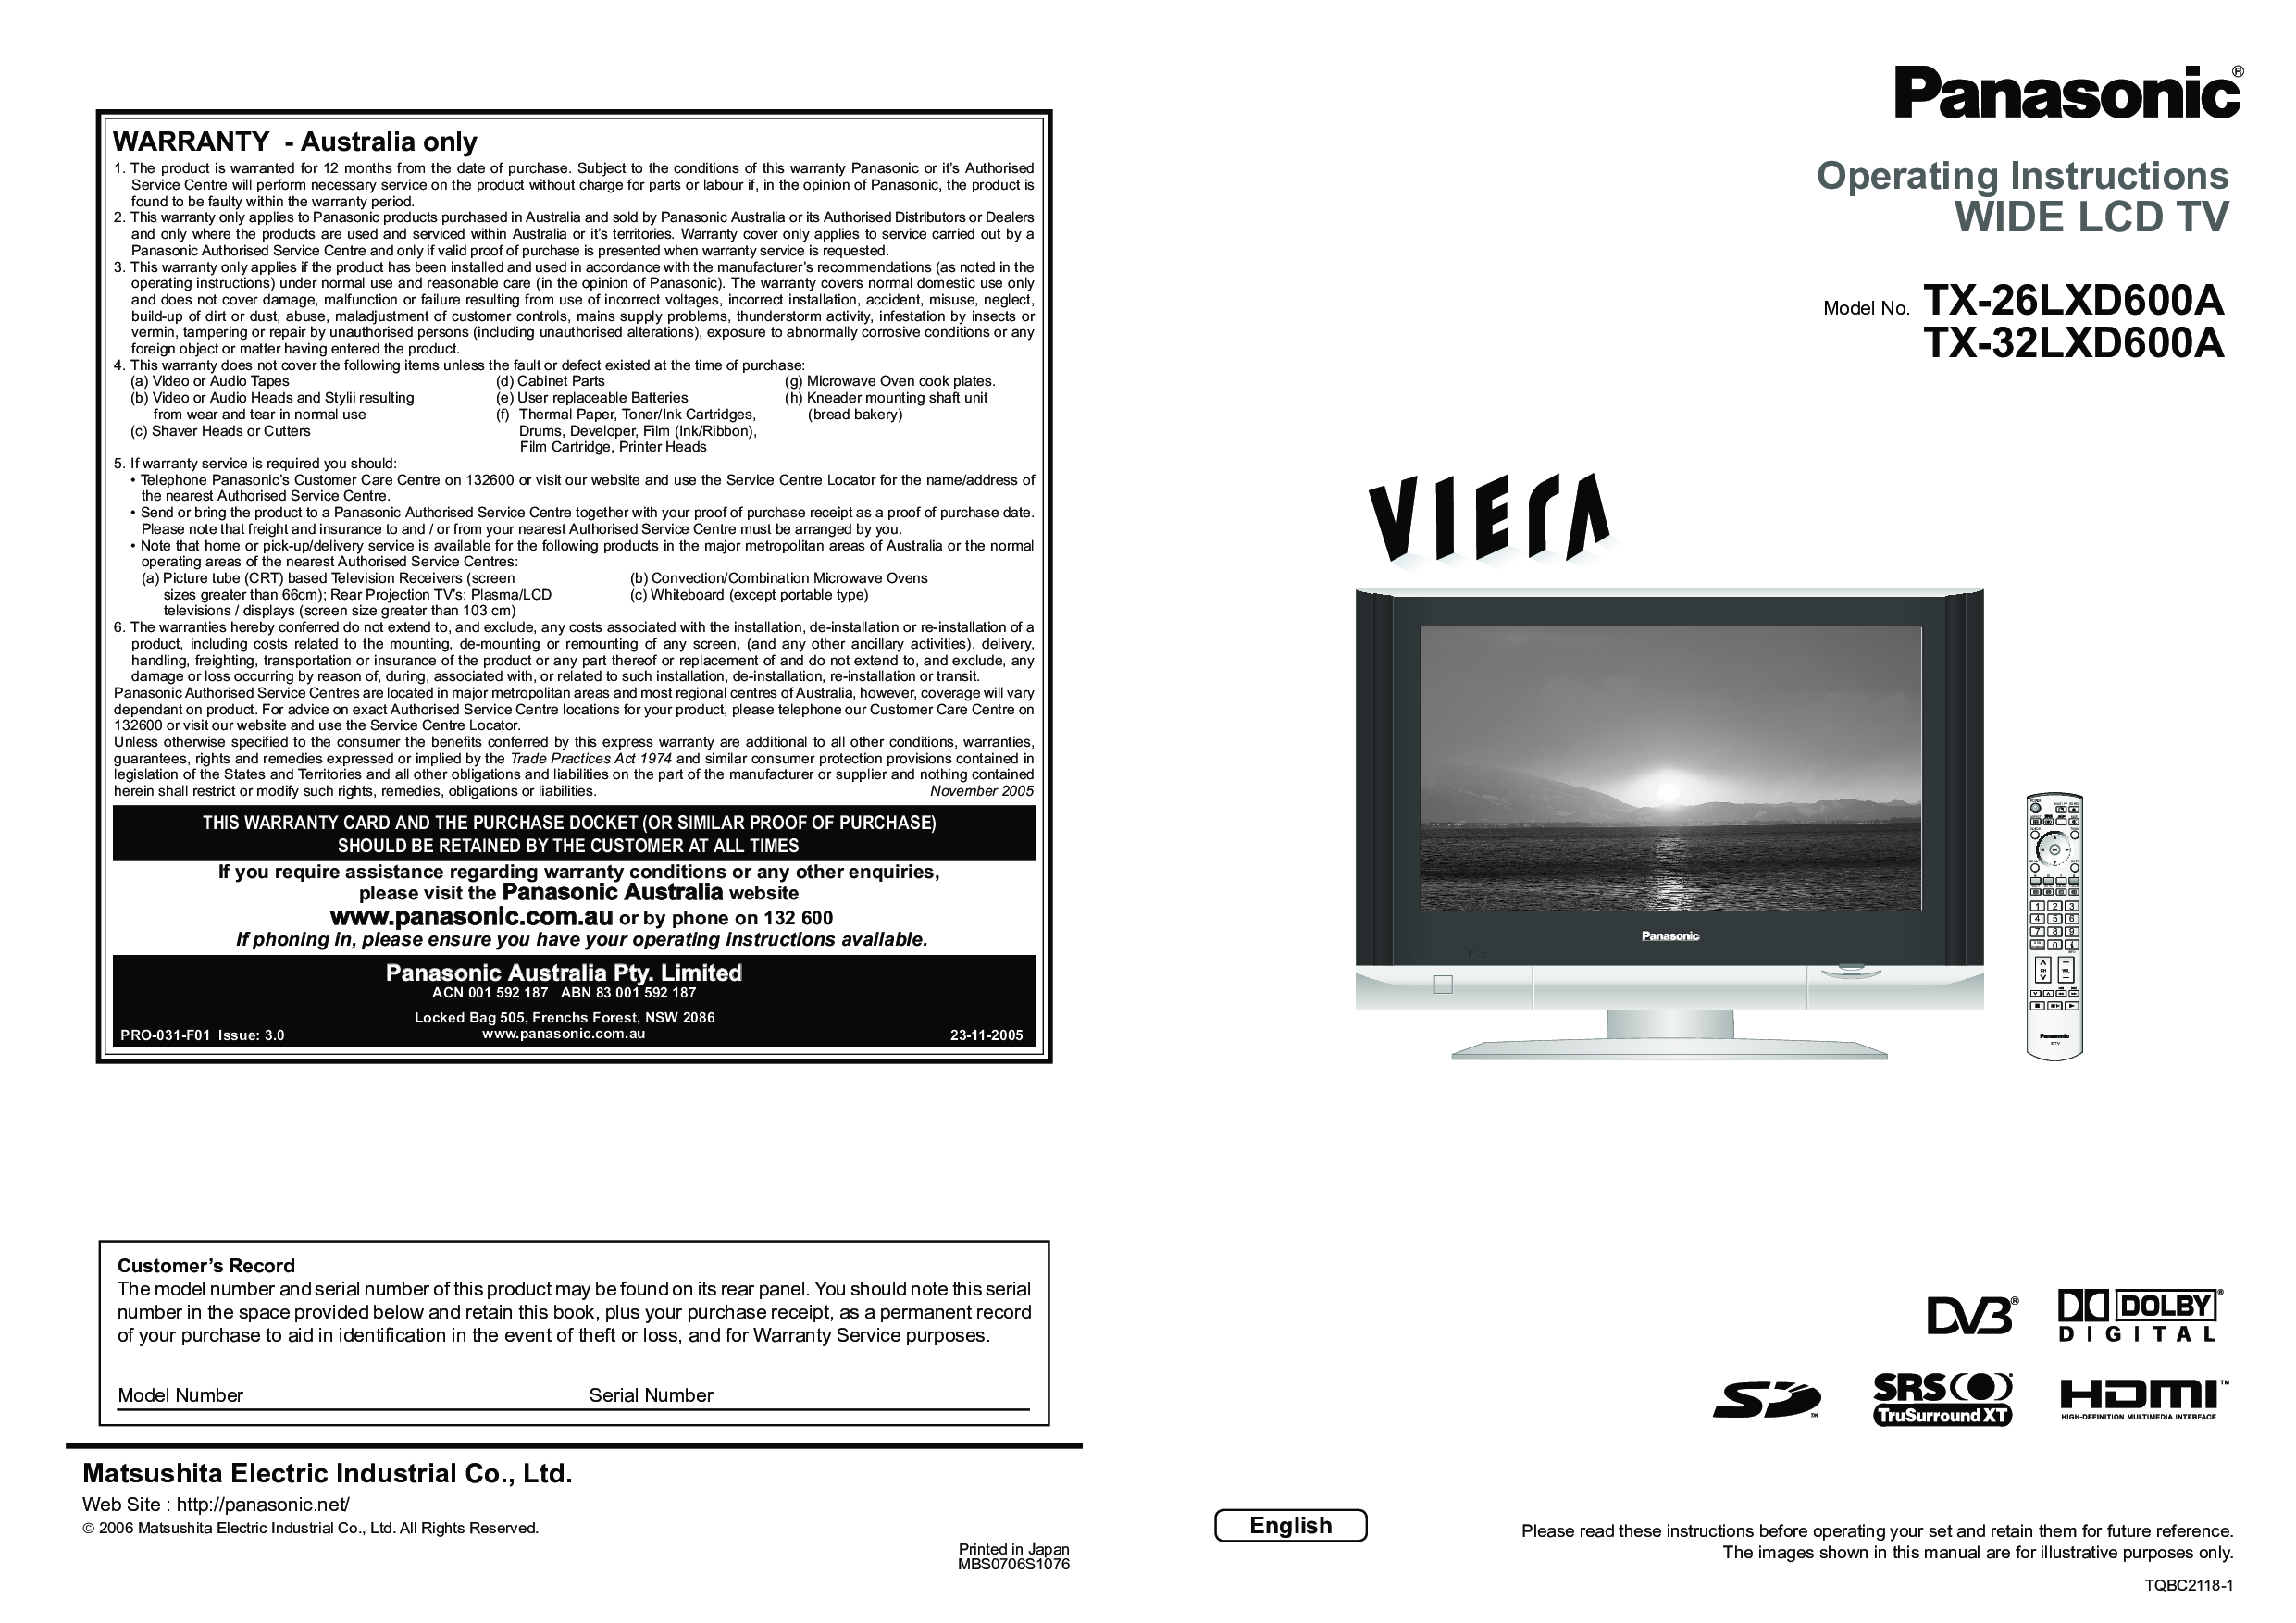 Panasonic TX-26LXD600A, TX-32LXD600A User Manual